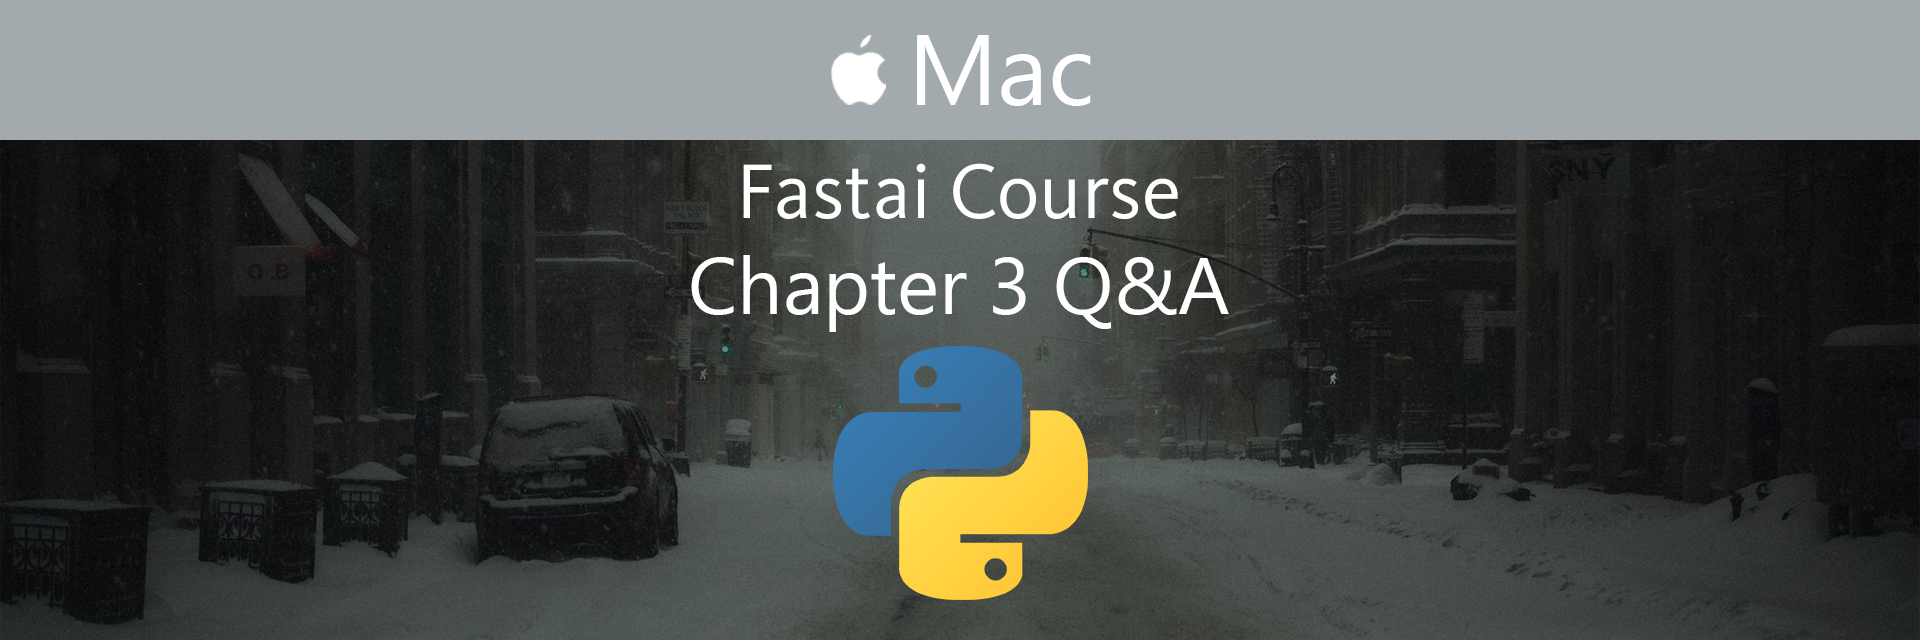 Fastai Course Chapter 3 Q A On Mac By David Littlefield Mac O Clock Apr 21 Medium